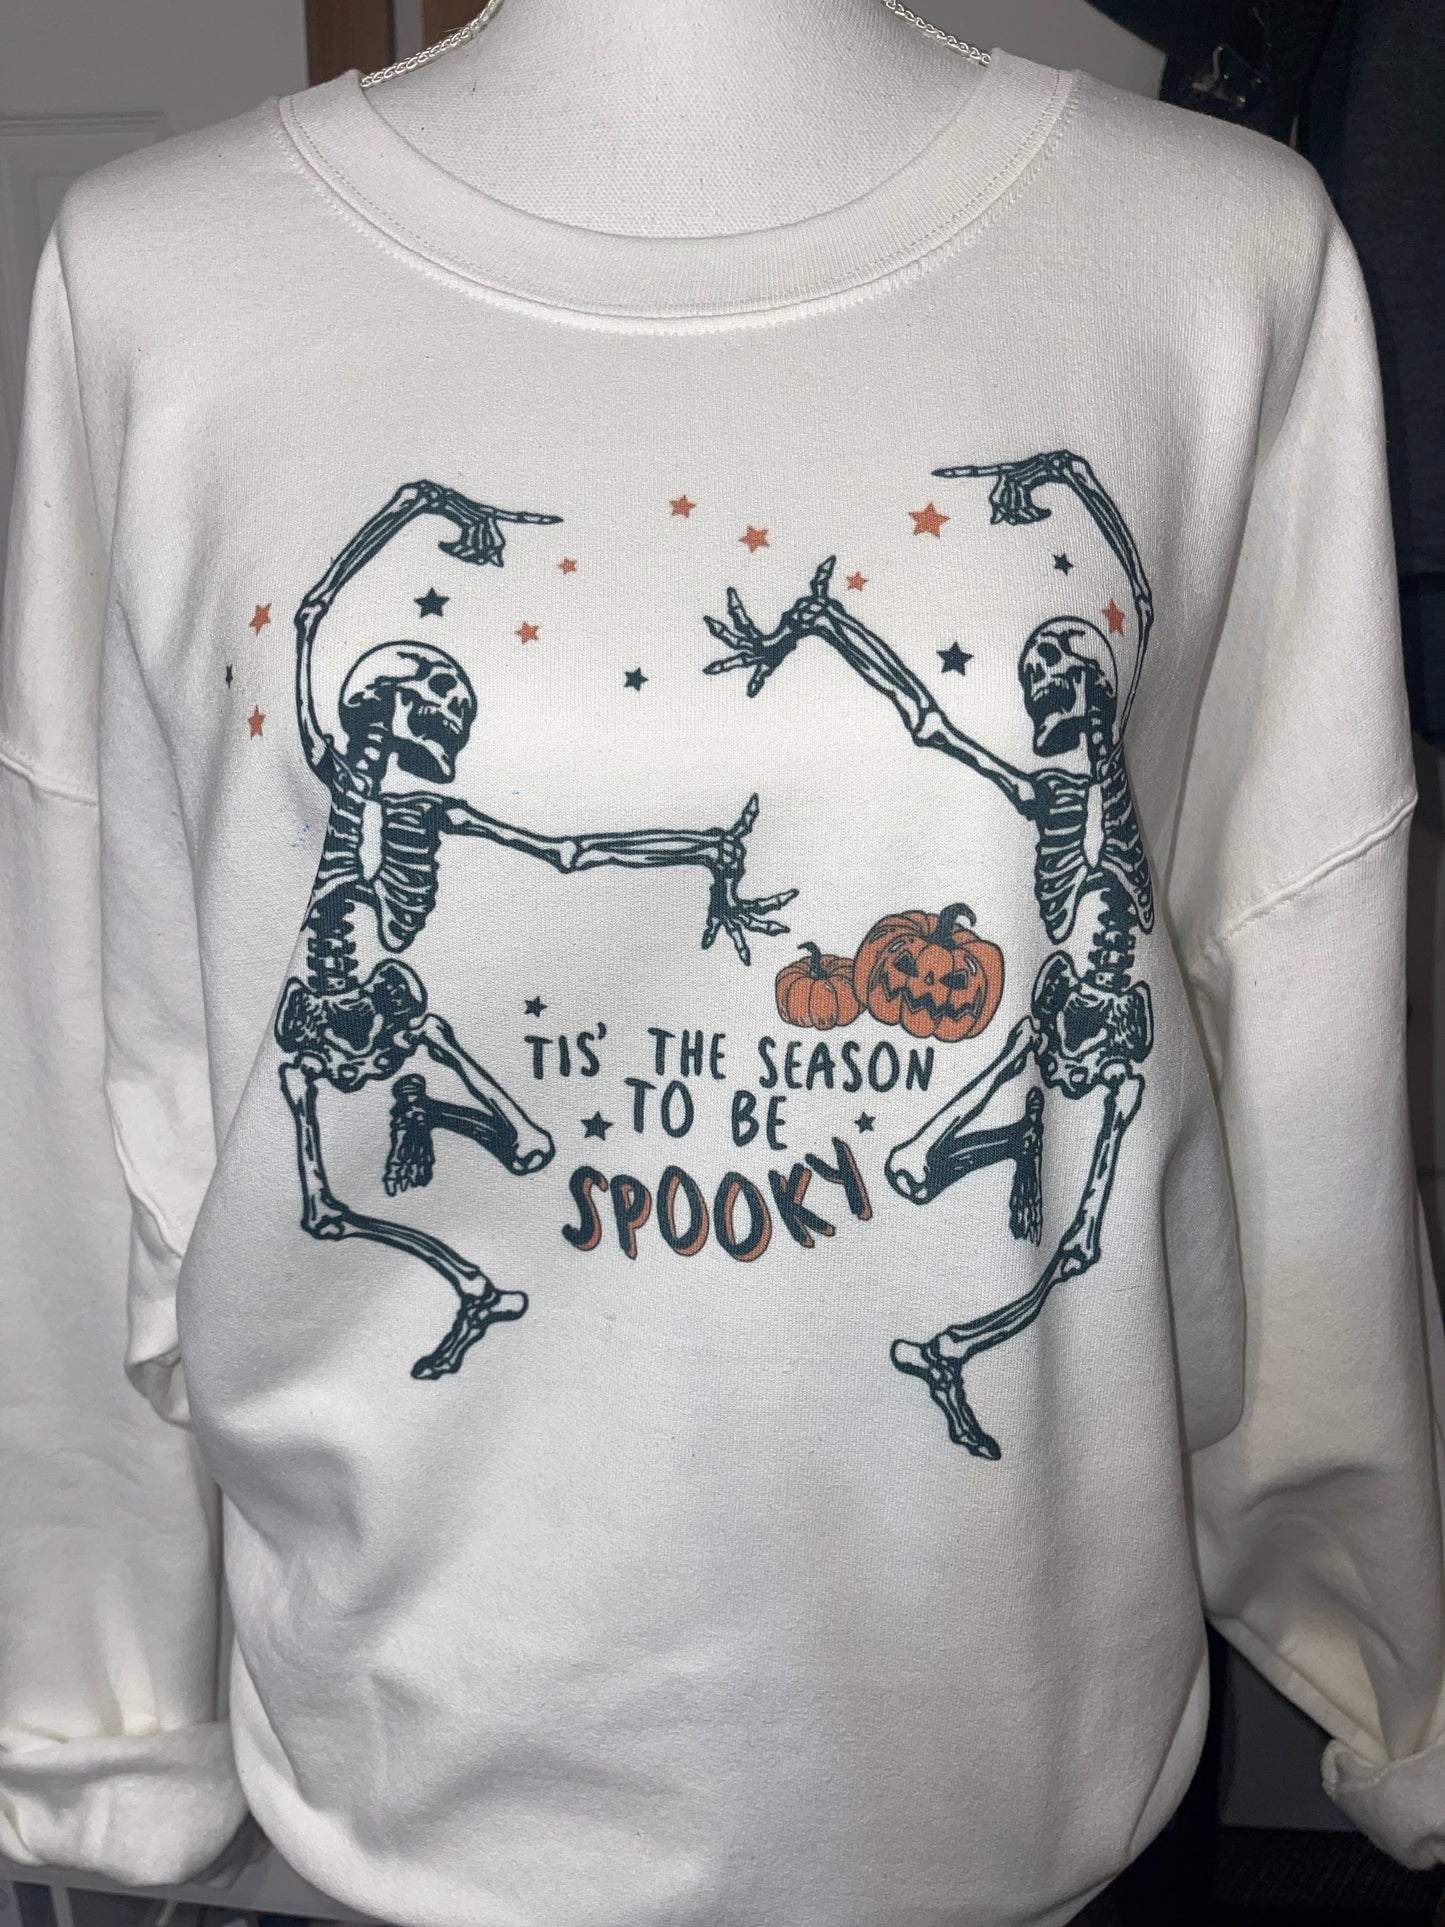 Tis the season to be spooky crewneck sweater